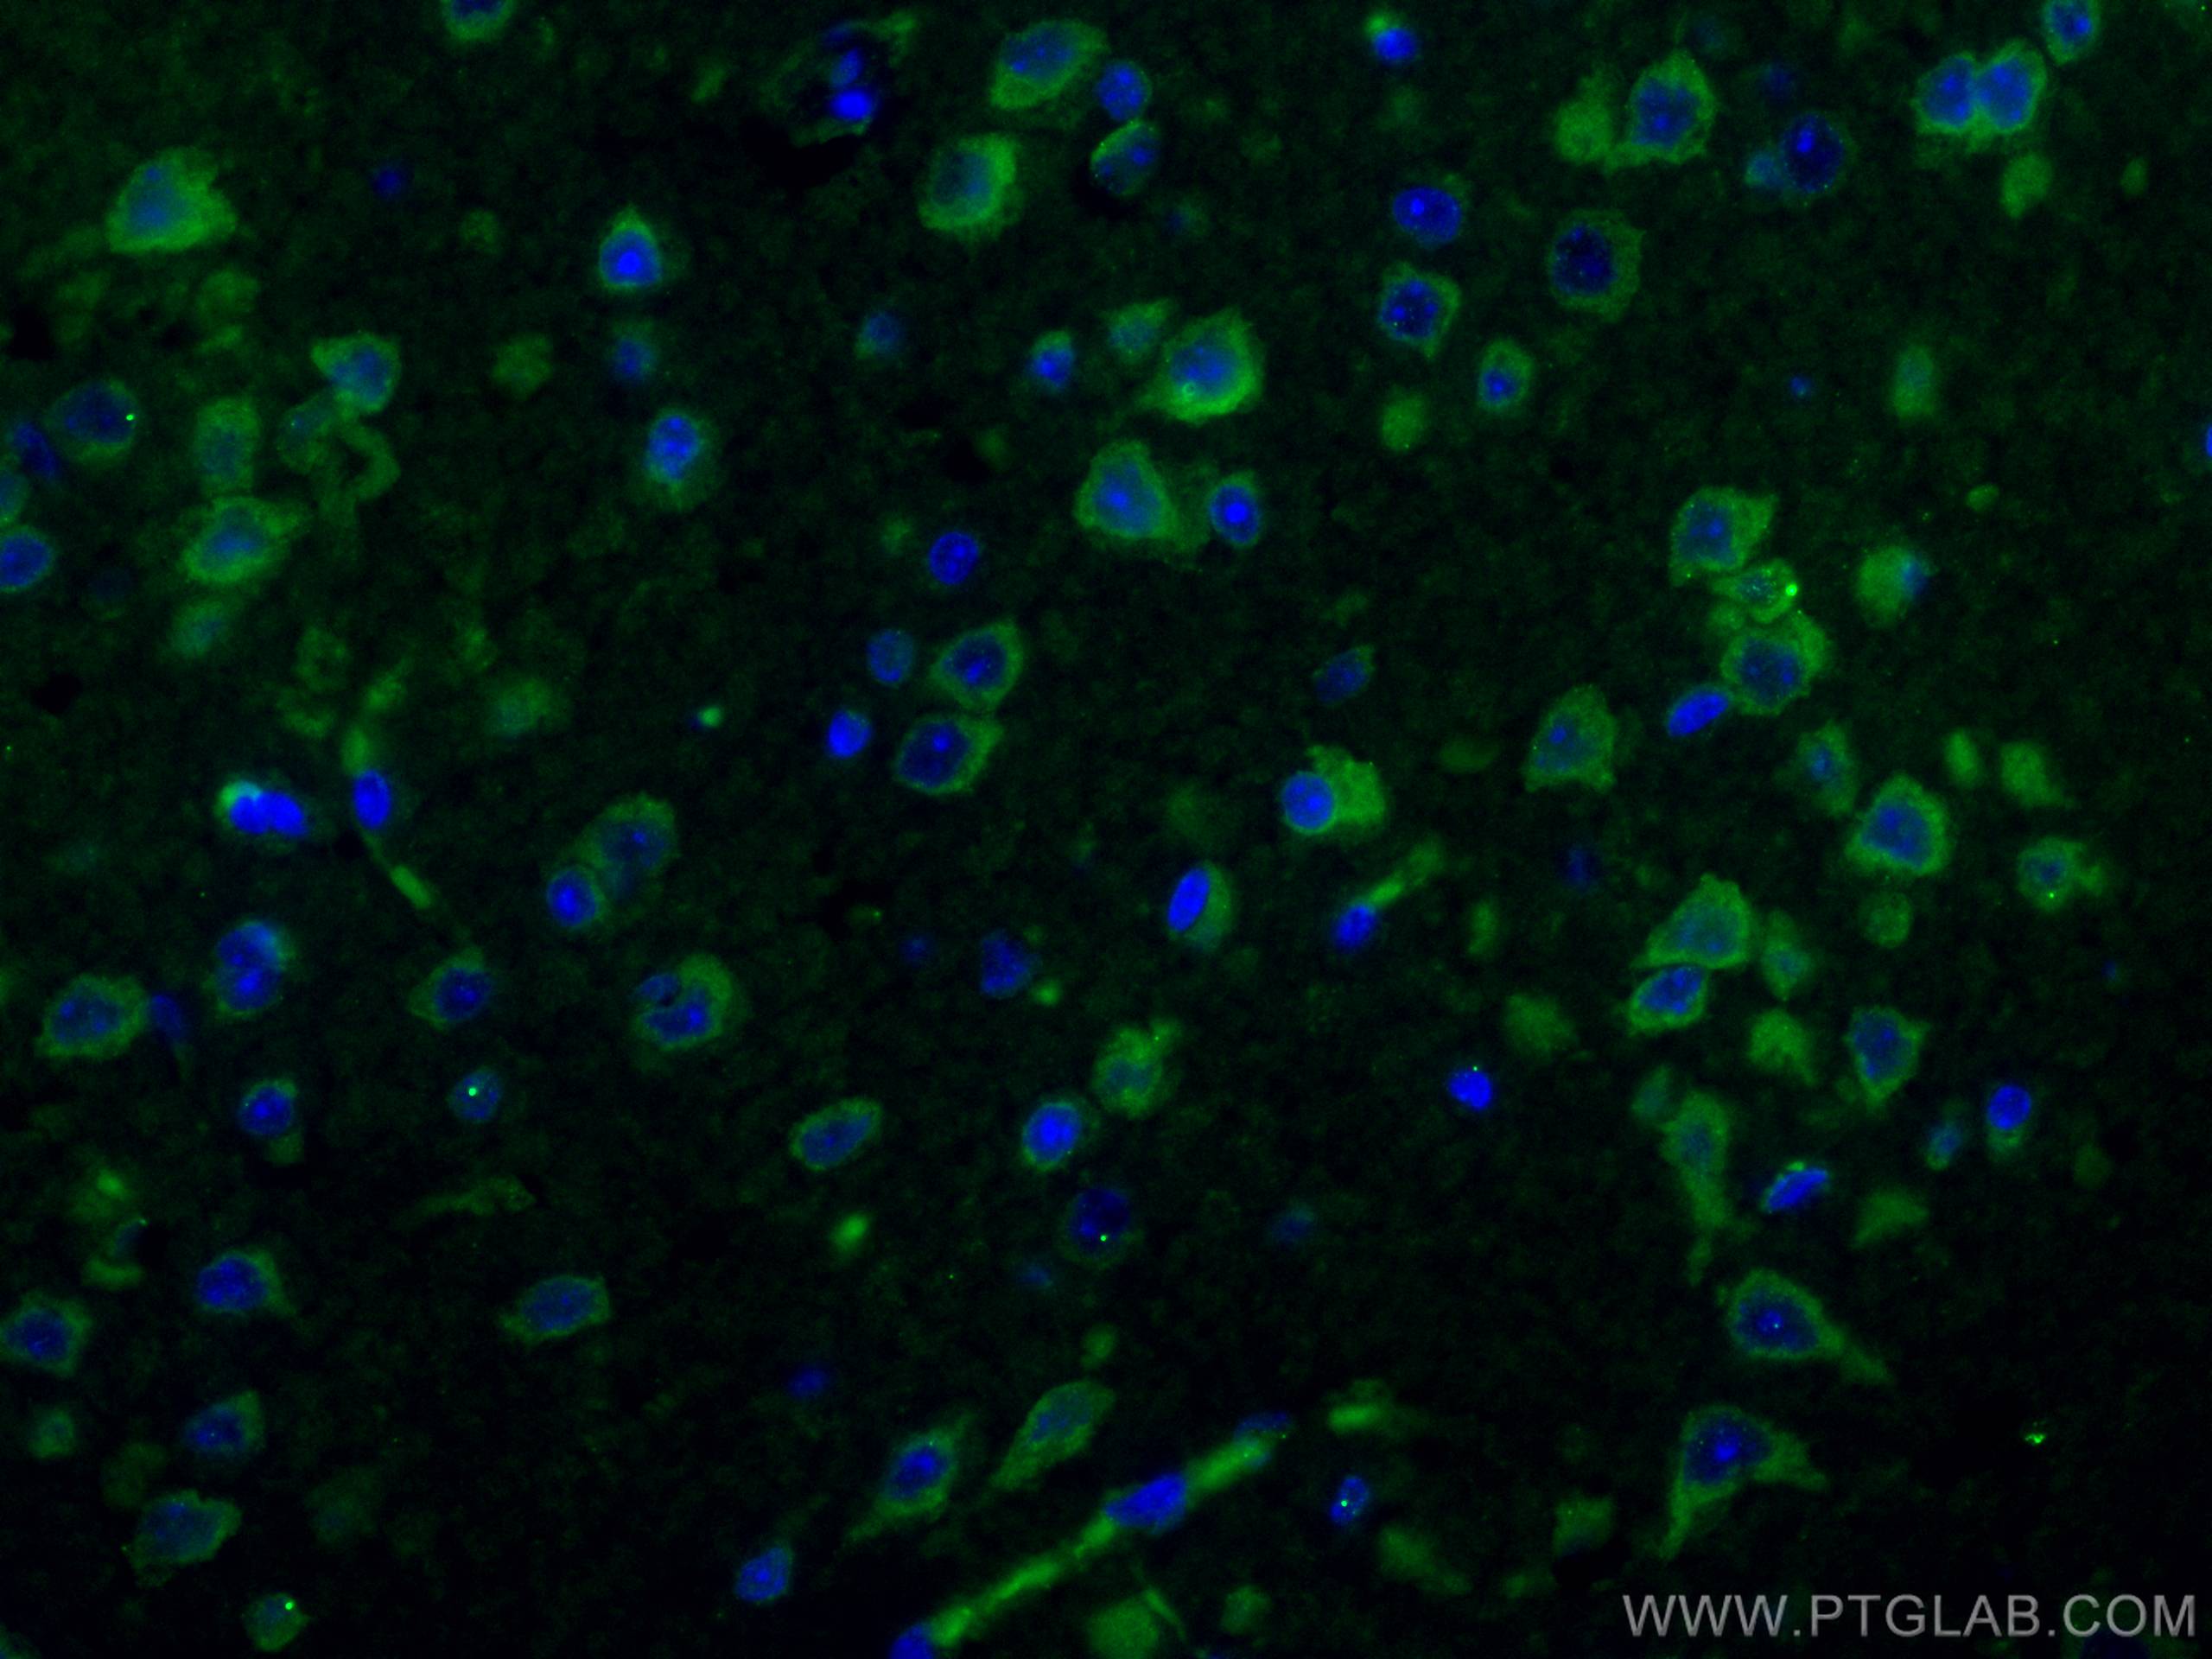 P62,SQSTM1 Antibody IF mouse brain tissue 66184-1-Ig